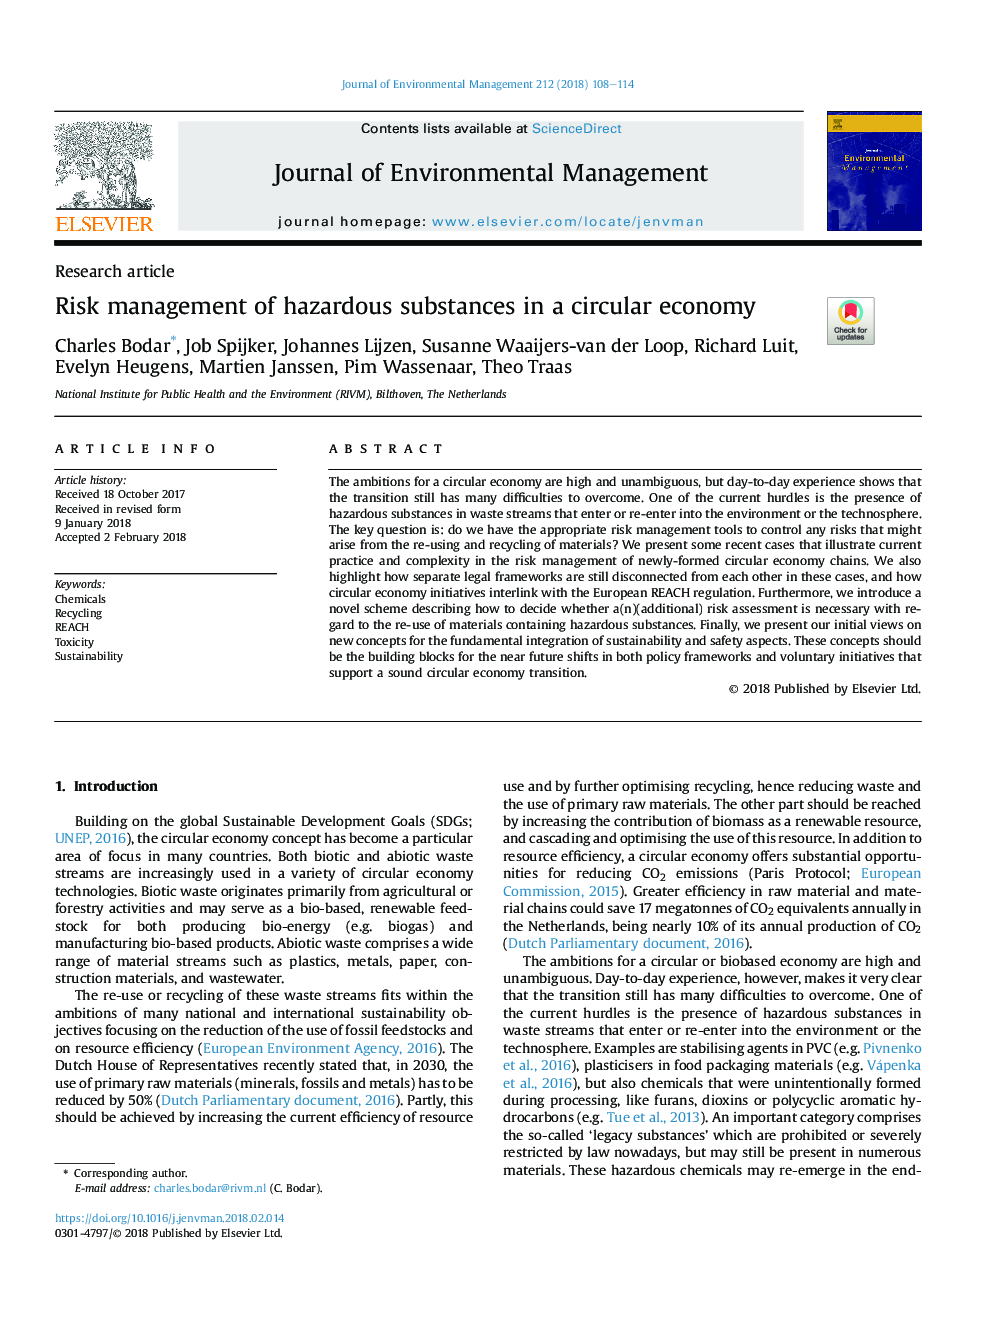 Risk management of hazardous substances in a circular economy